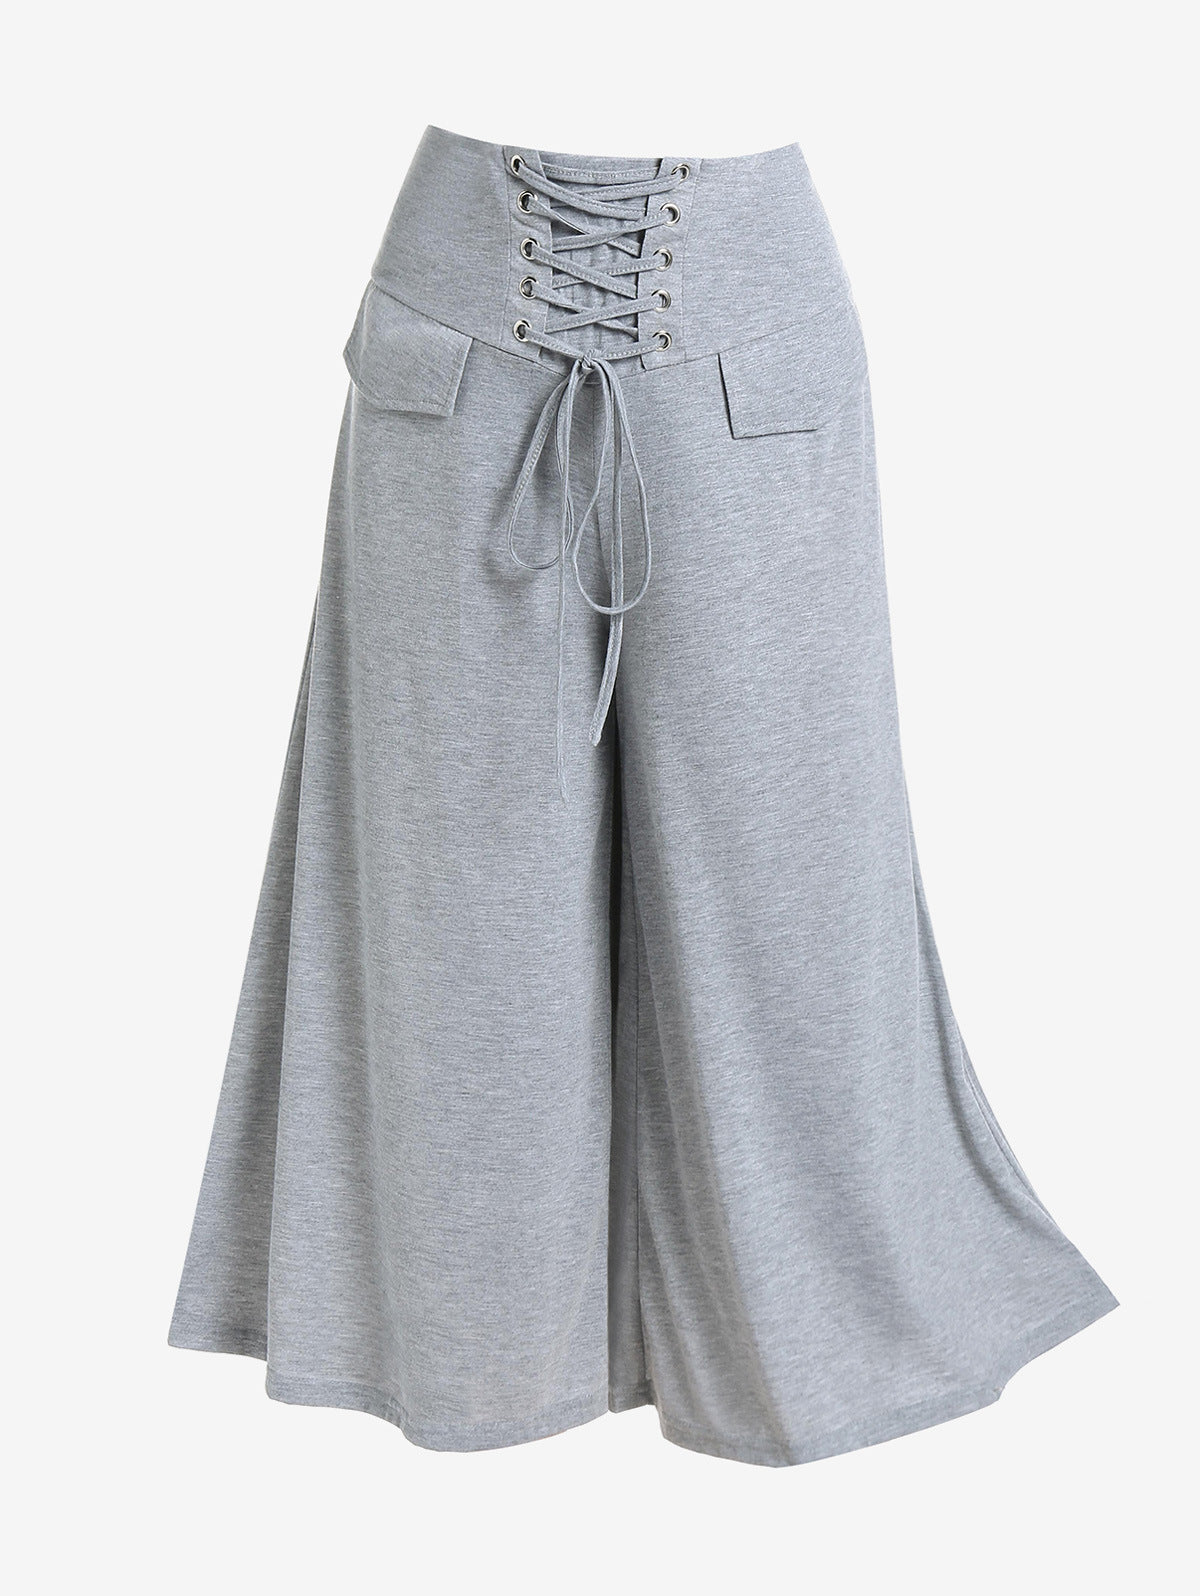 Pants  | Women's Clothing High Waist With Straps Plus Size Loose Pants | Shallow Flower Ash |  2XL| thecurvestory.myshopify.com